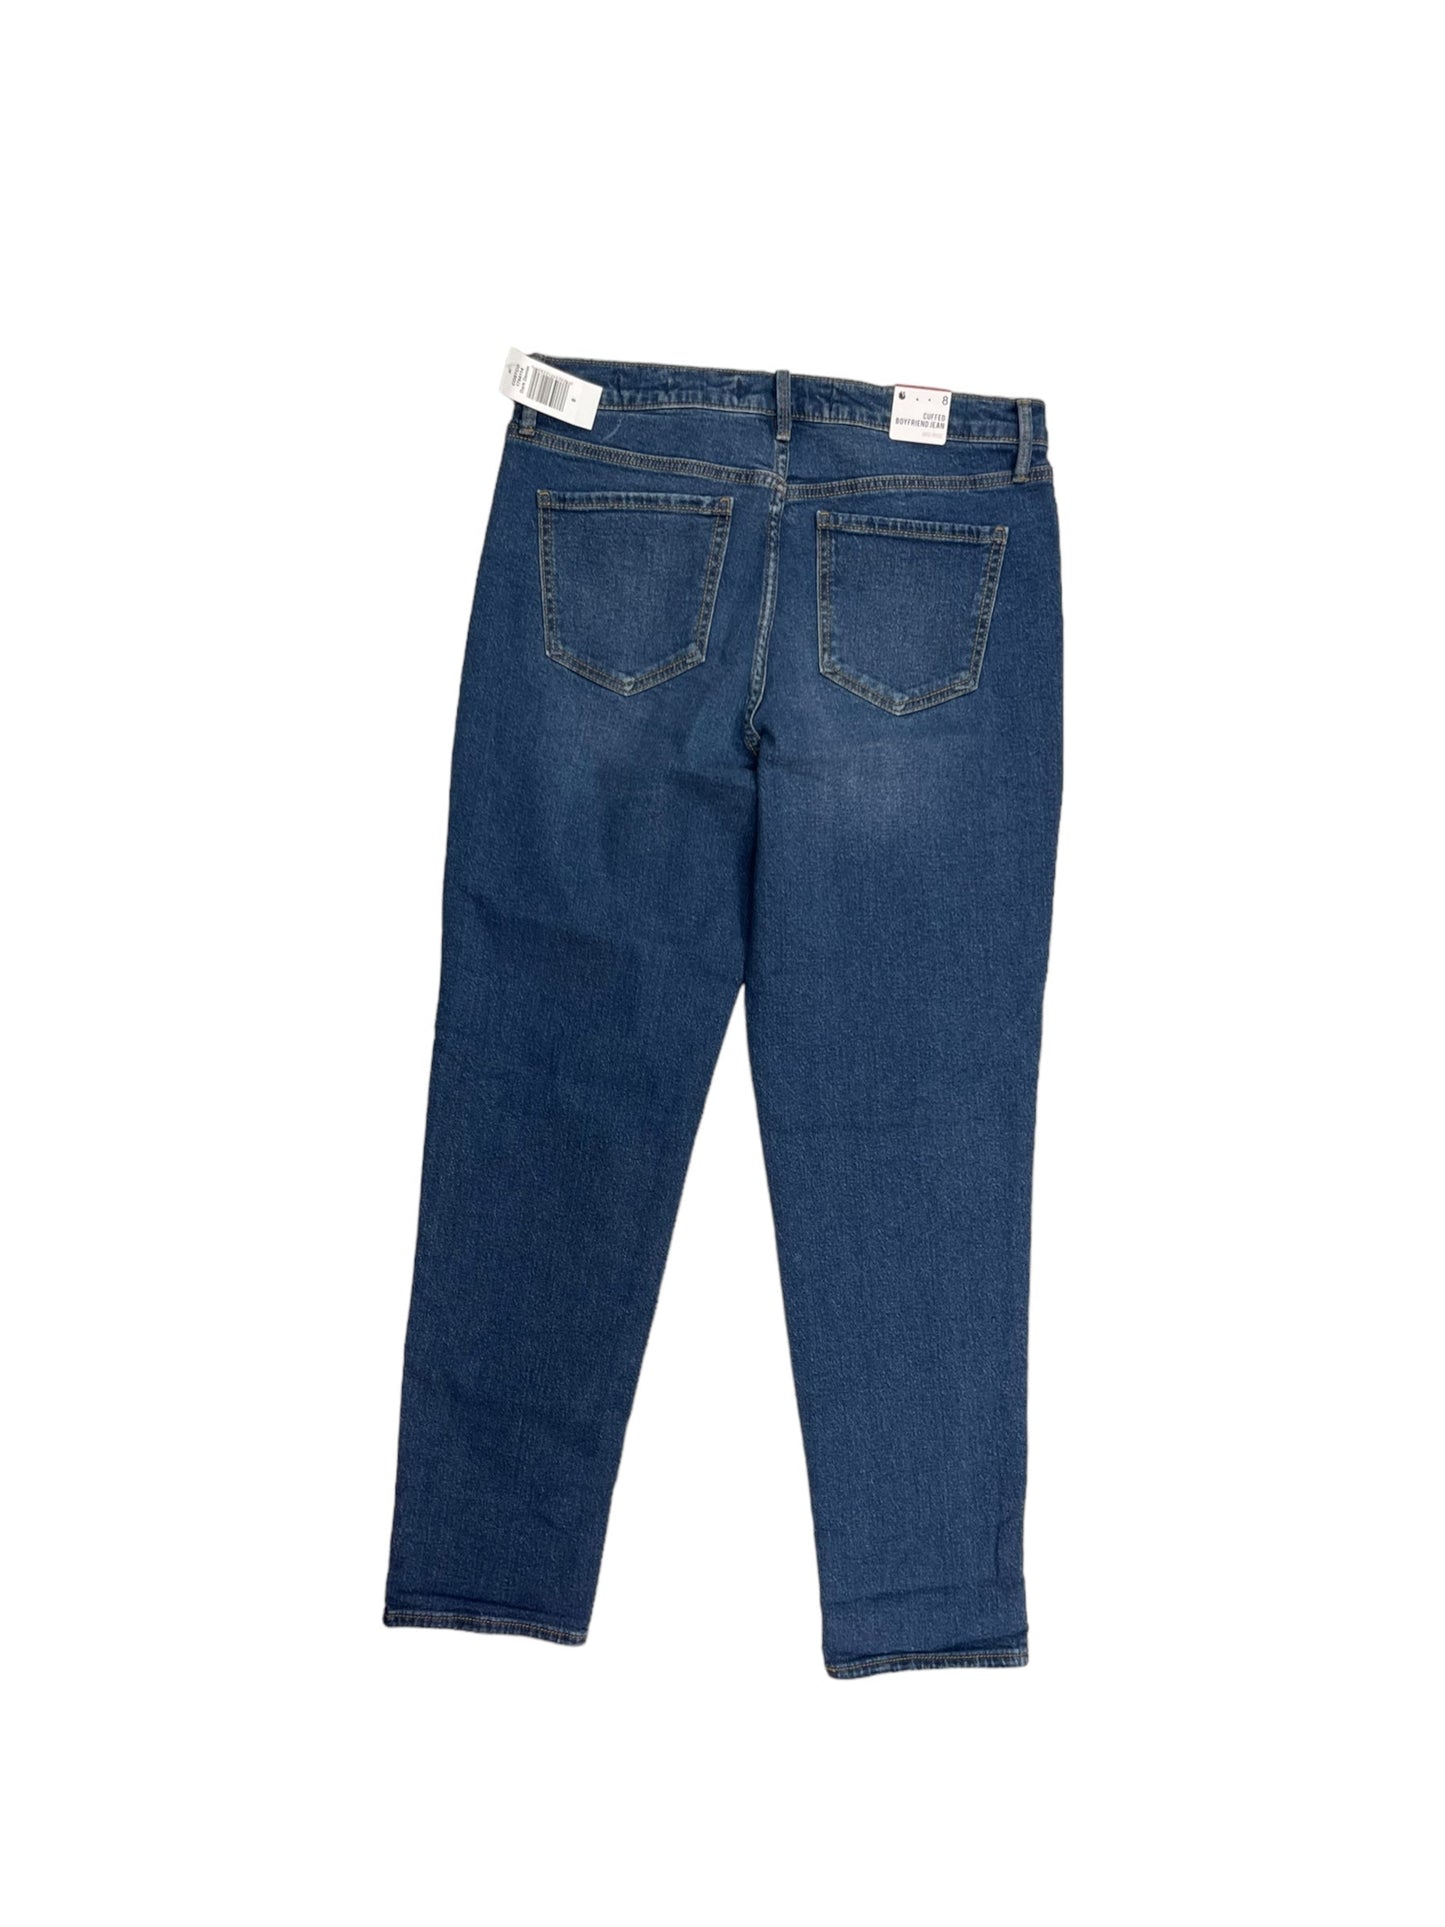 Blue Denim Jeans Boyfriend Gloria Vanderbilt, Size 8